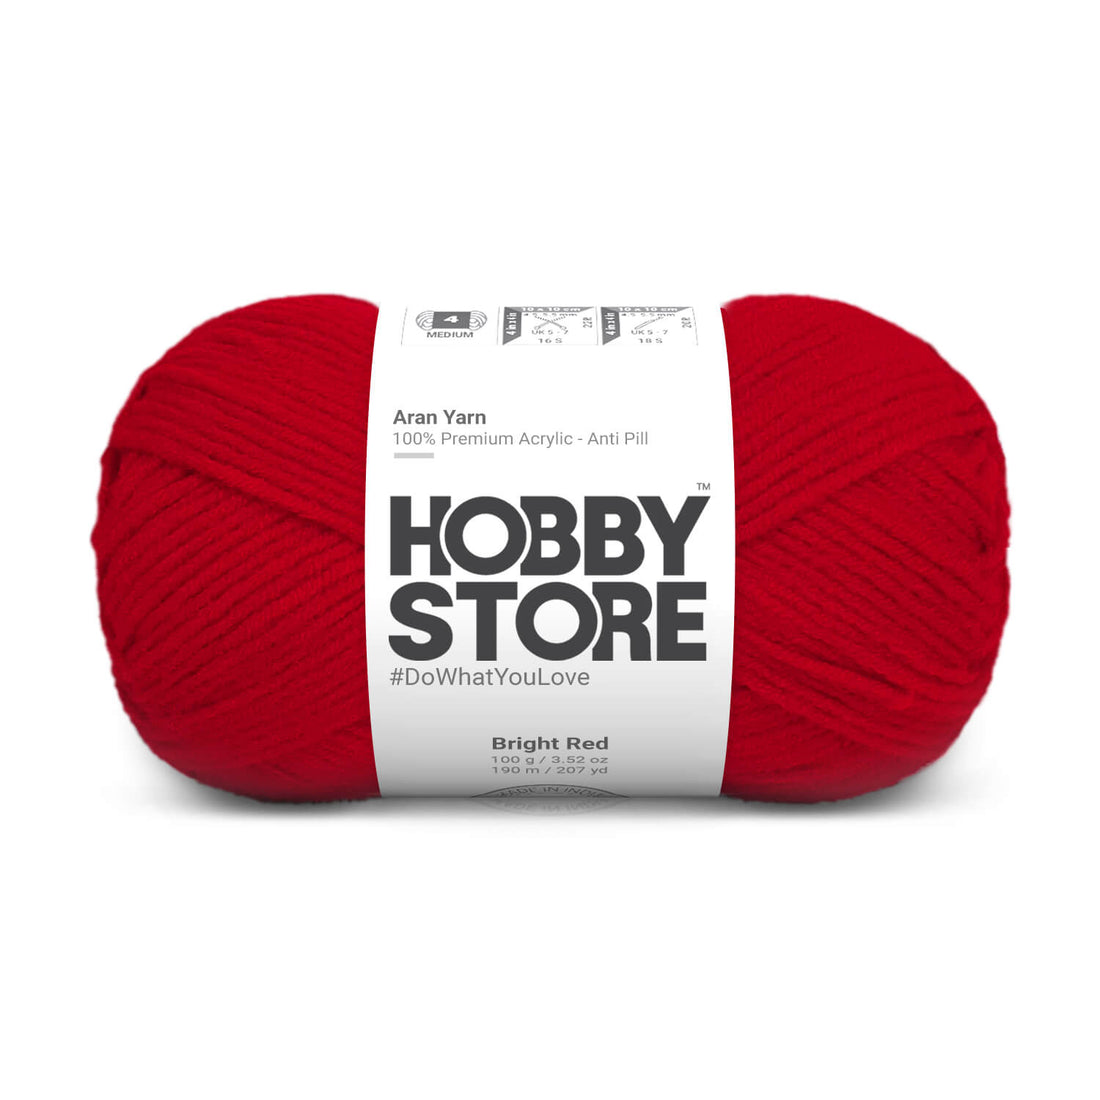 Steel Yarn Needles - Size 16, Hobby Lobby